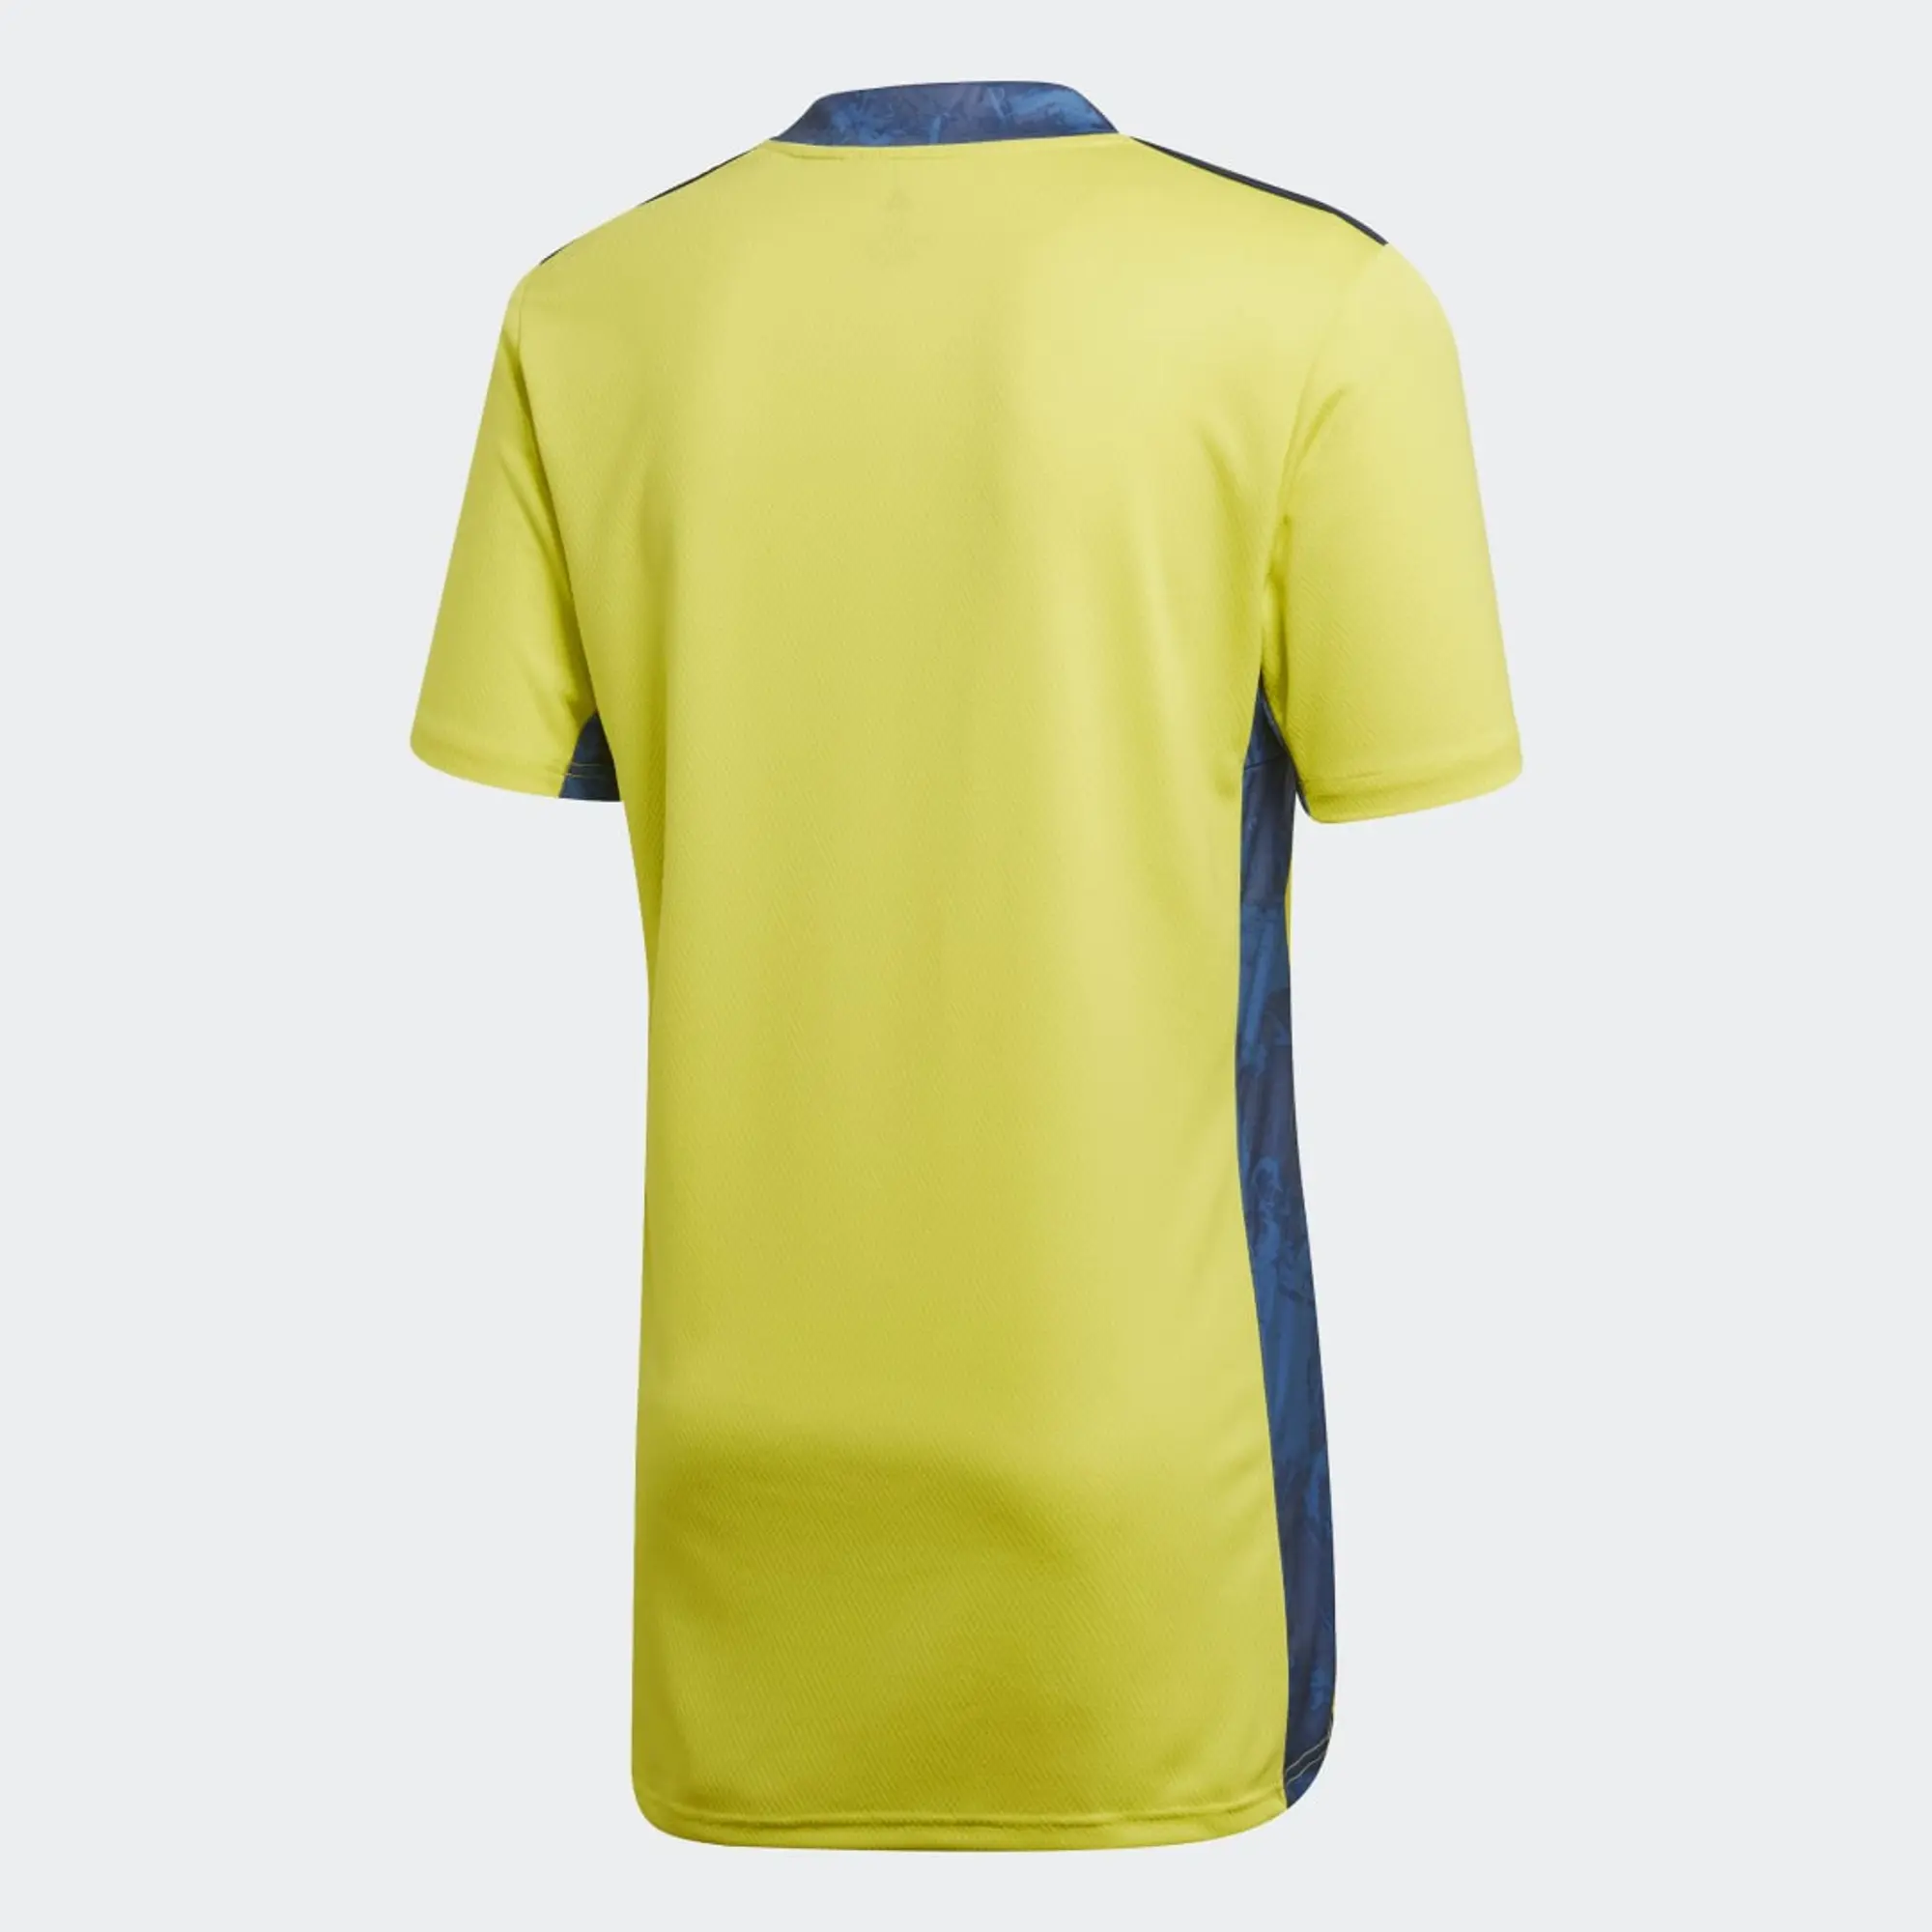 adidas Juventus Mens LS Goalkeeper Home Shirt 2020/21